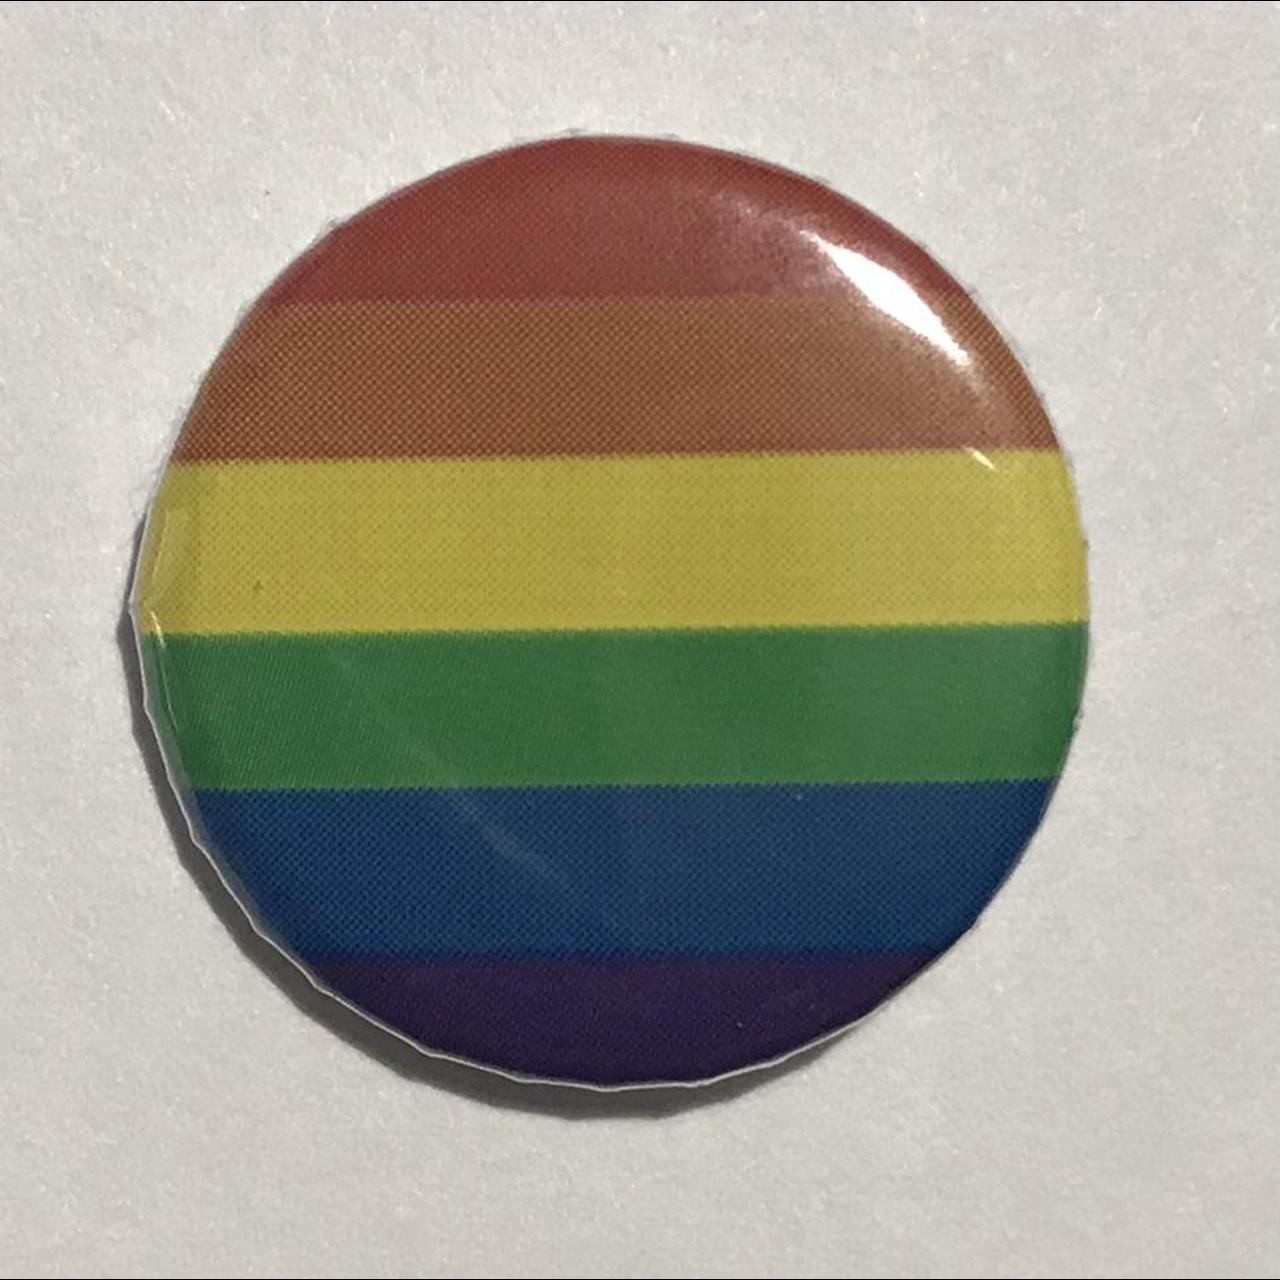 gay pride pin badge